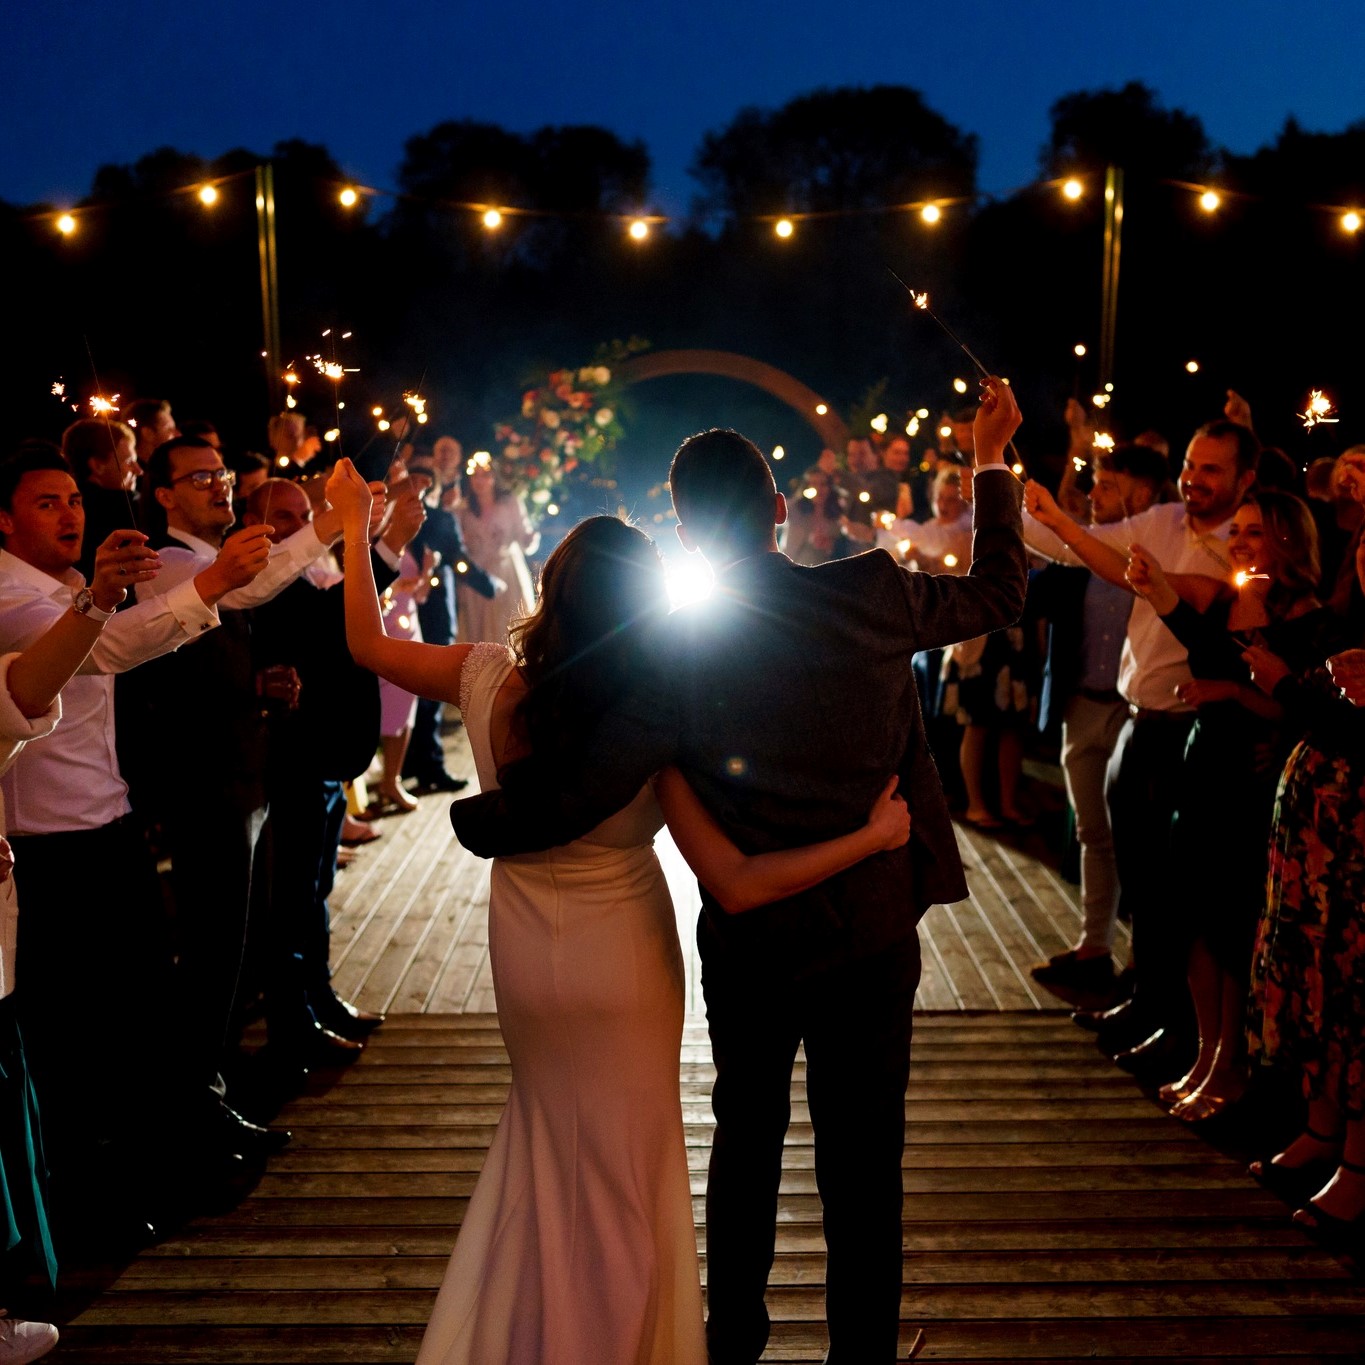 Wedding couple celebrating at outdoor wedding venue, Oxfordshire